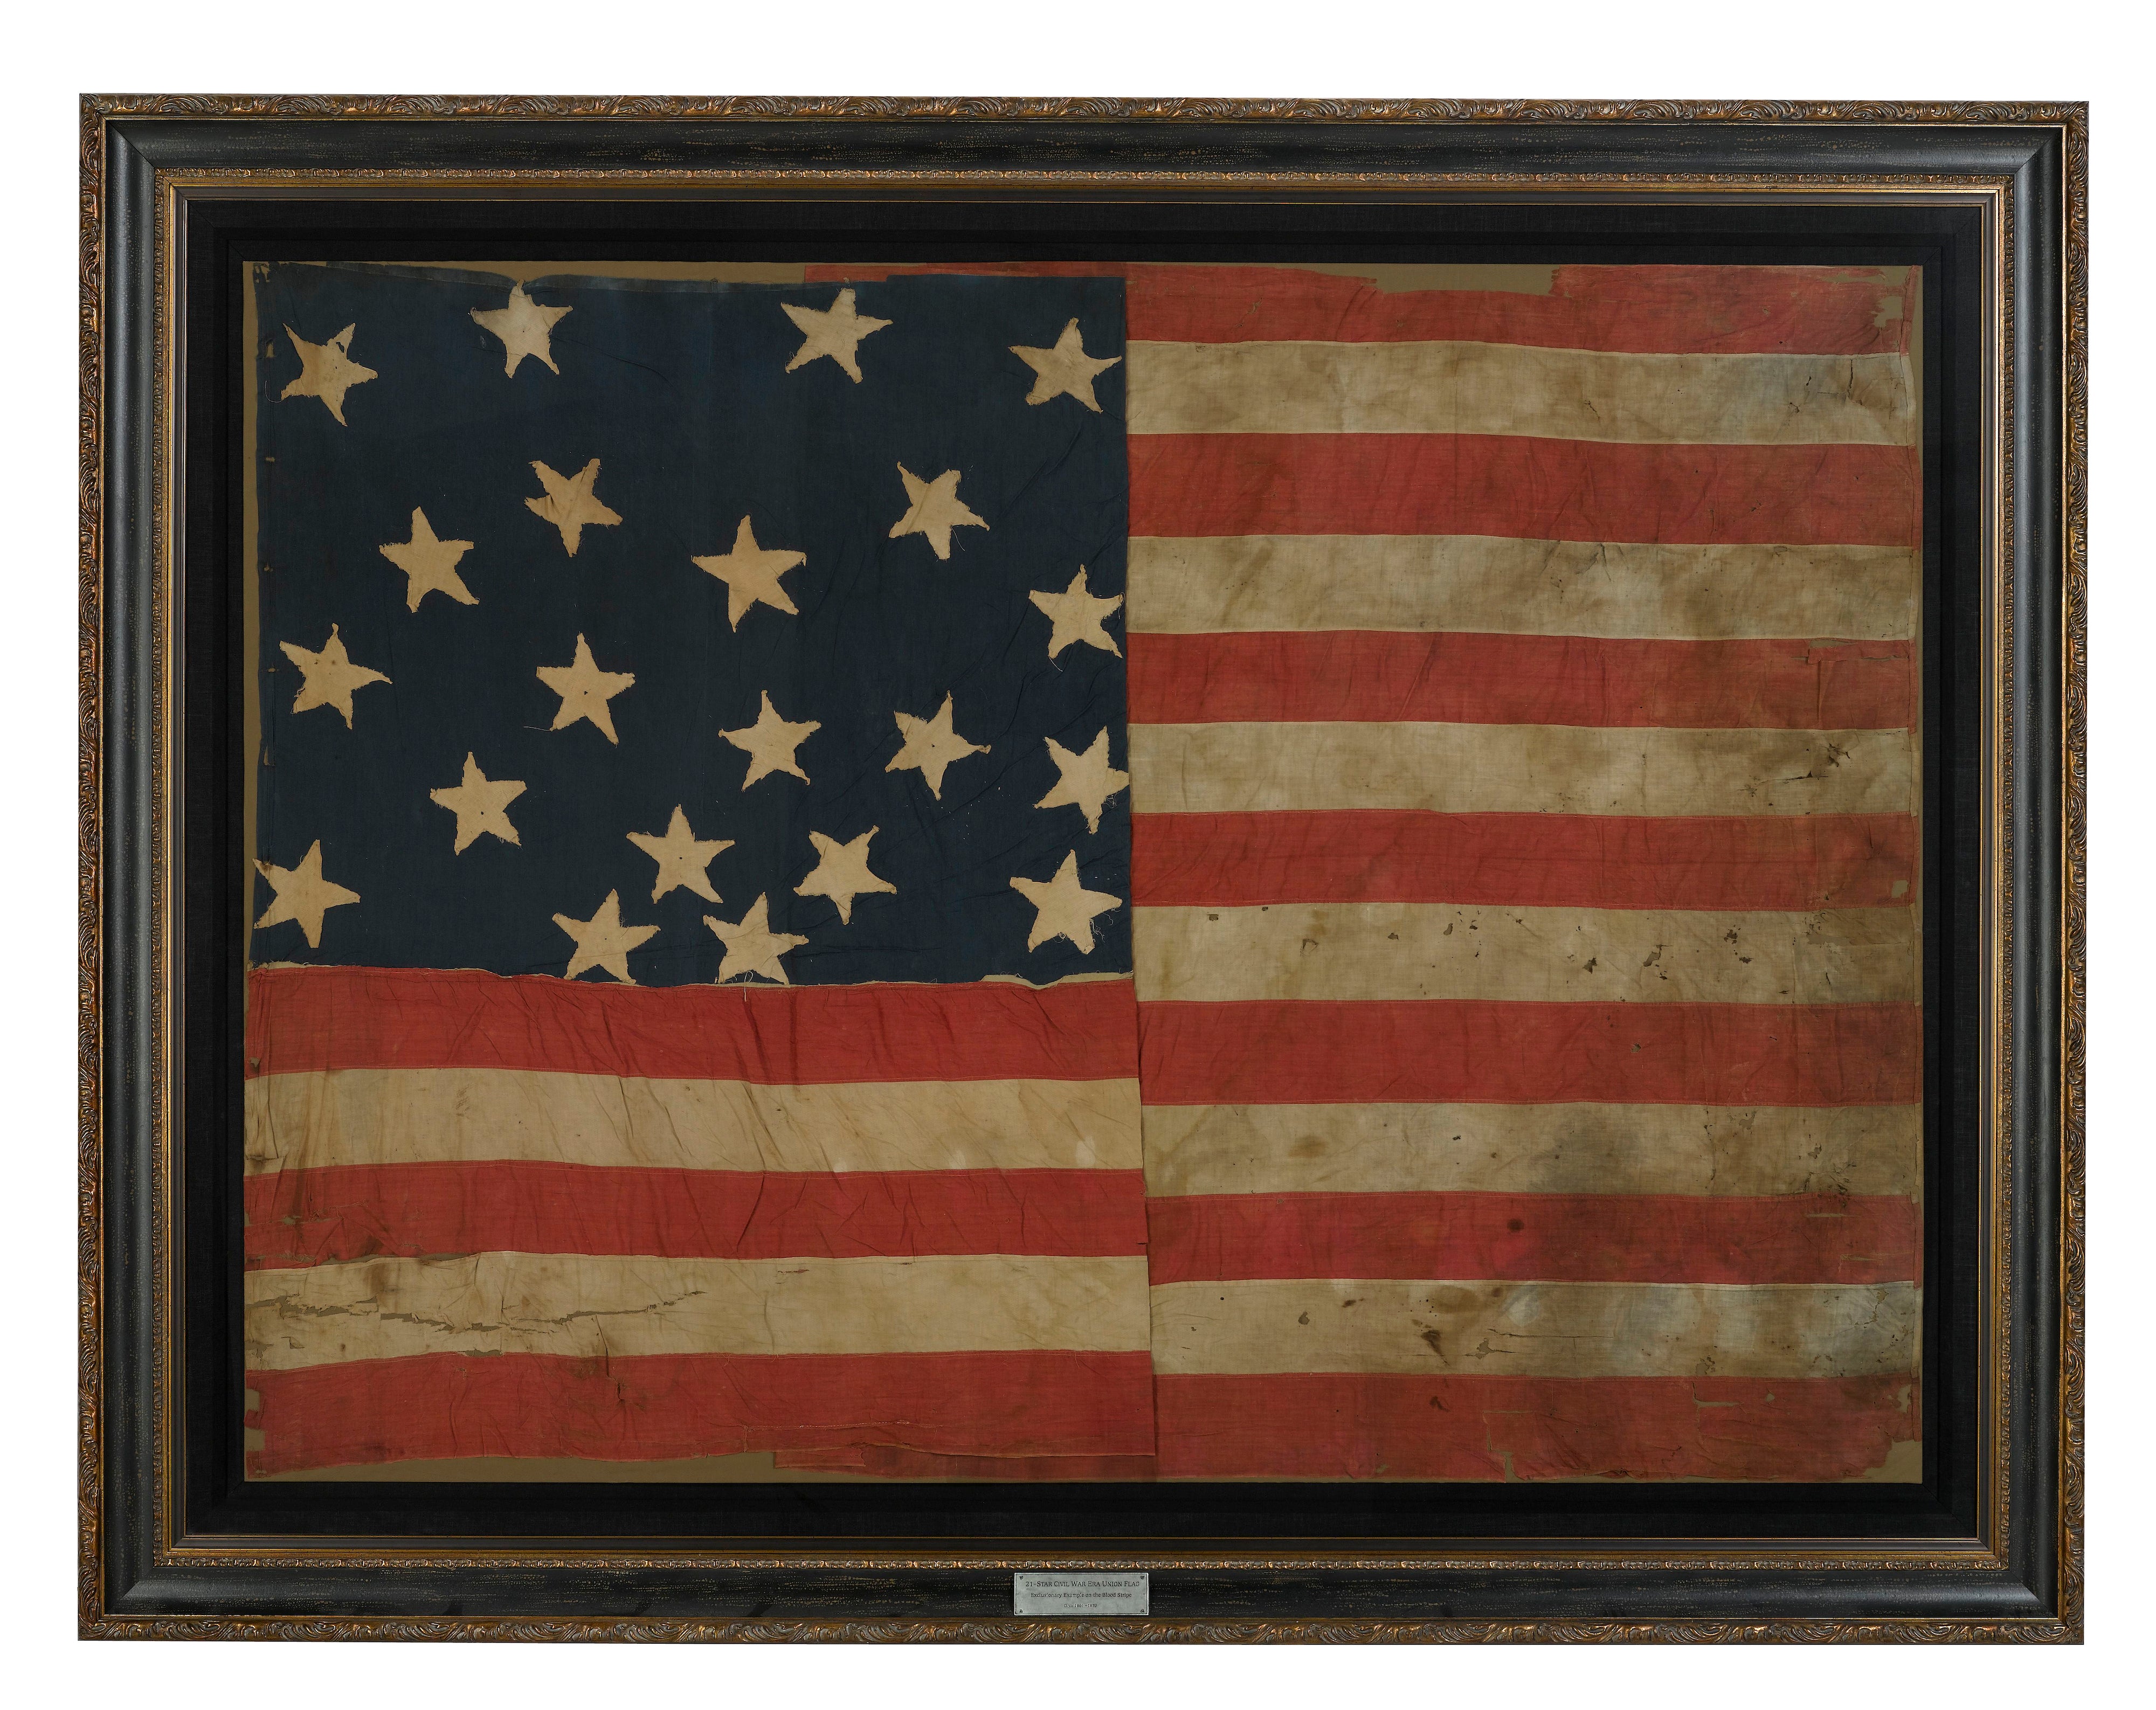 21-Star Exclusionary American Flag, circa 1861